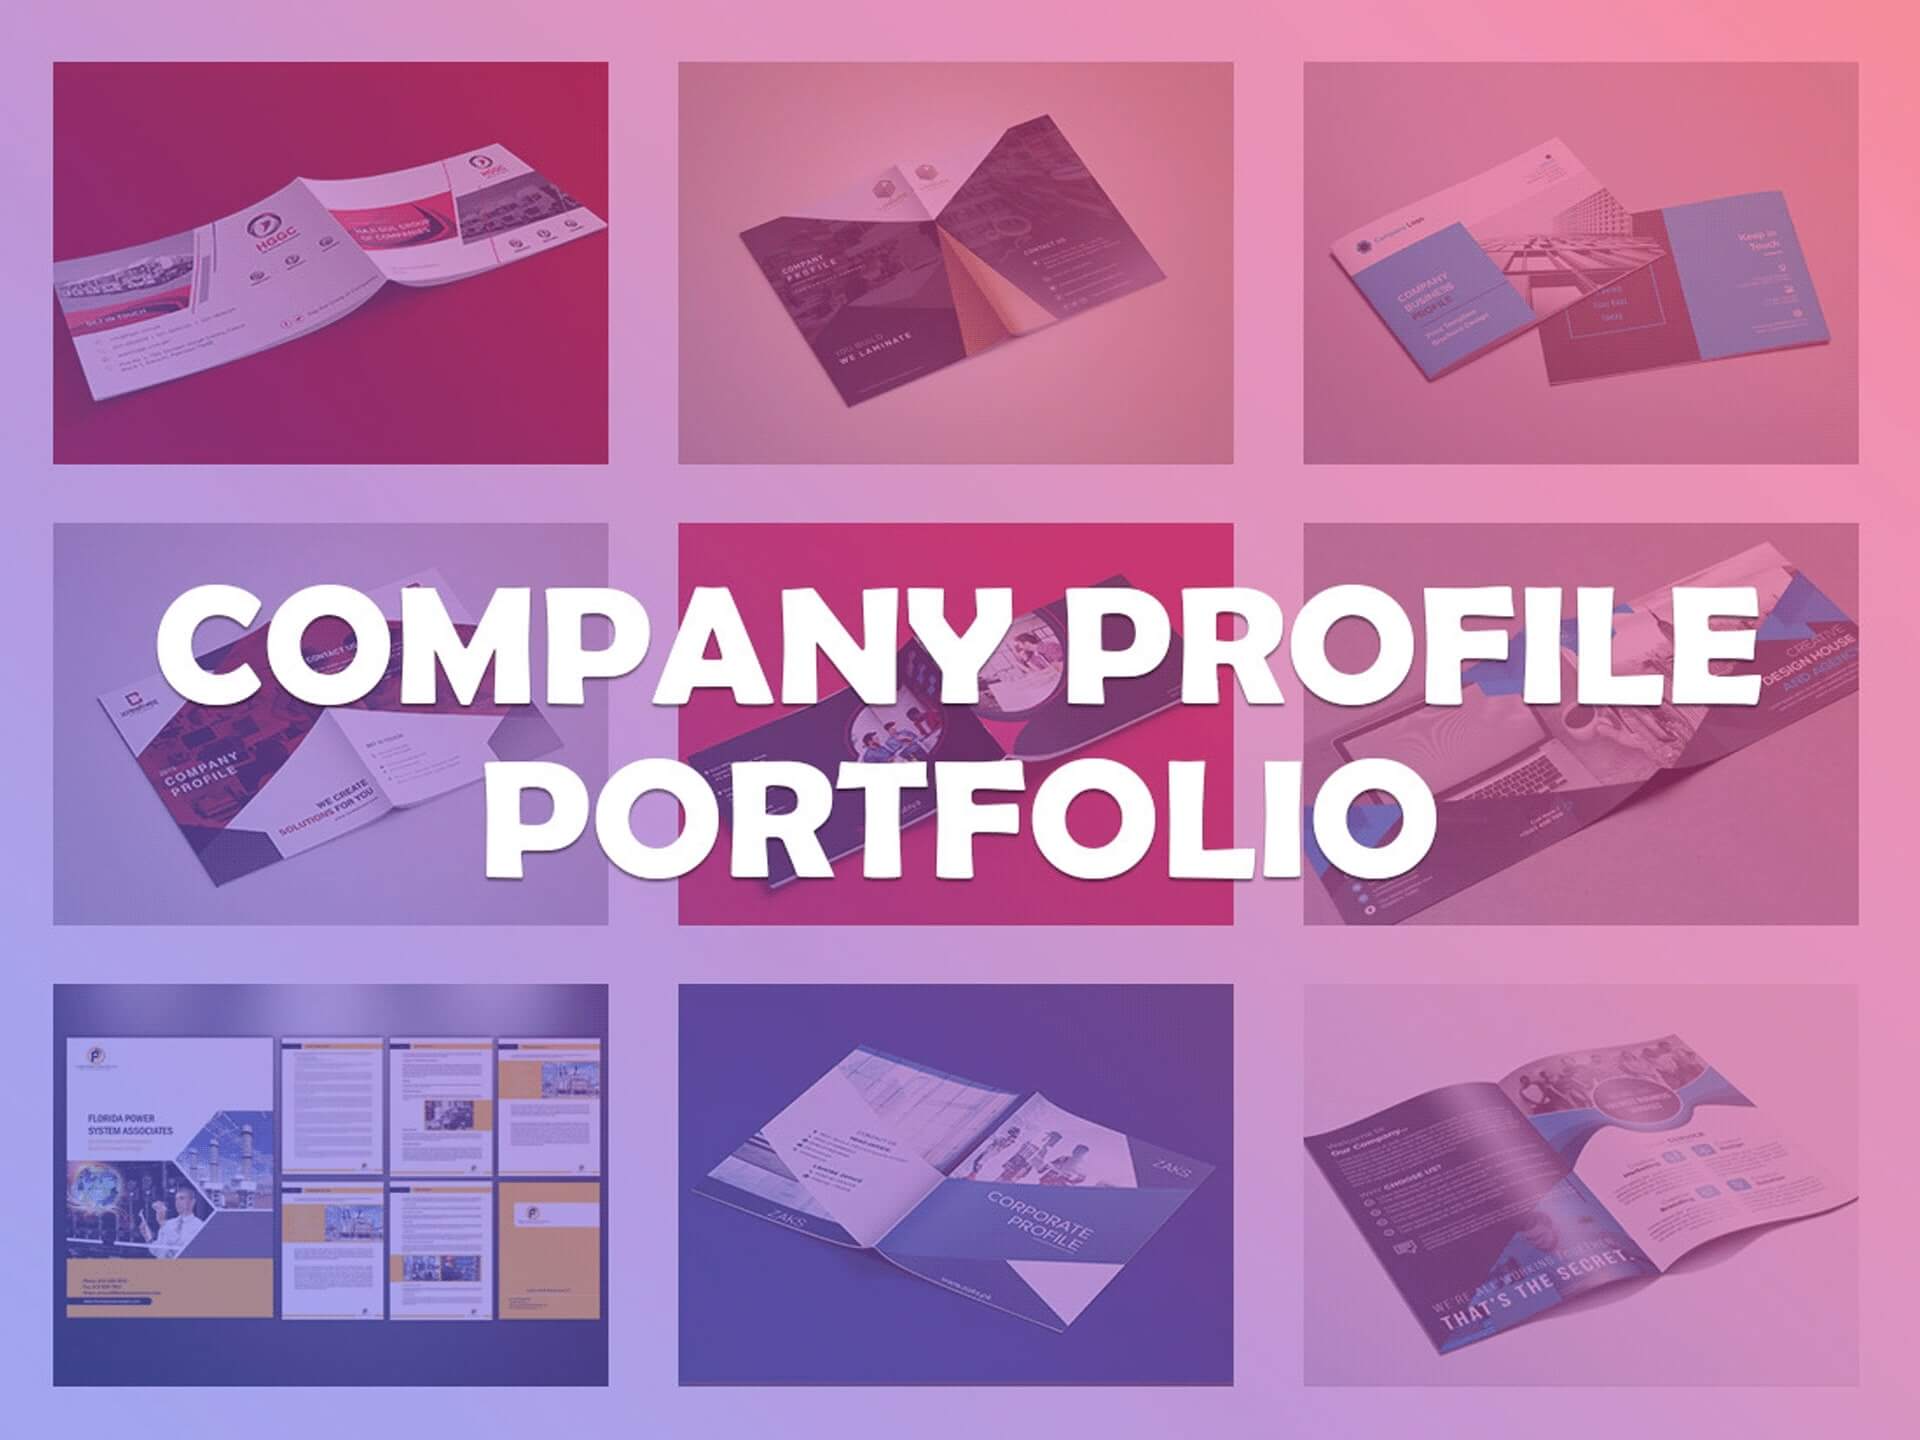 Company Profile Portfolio